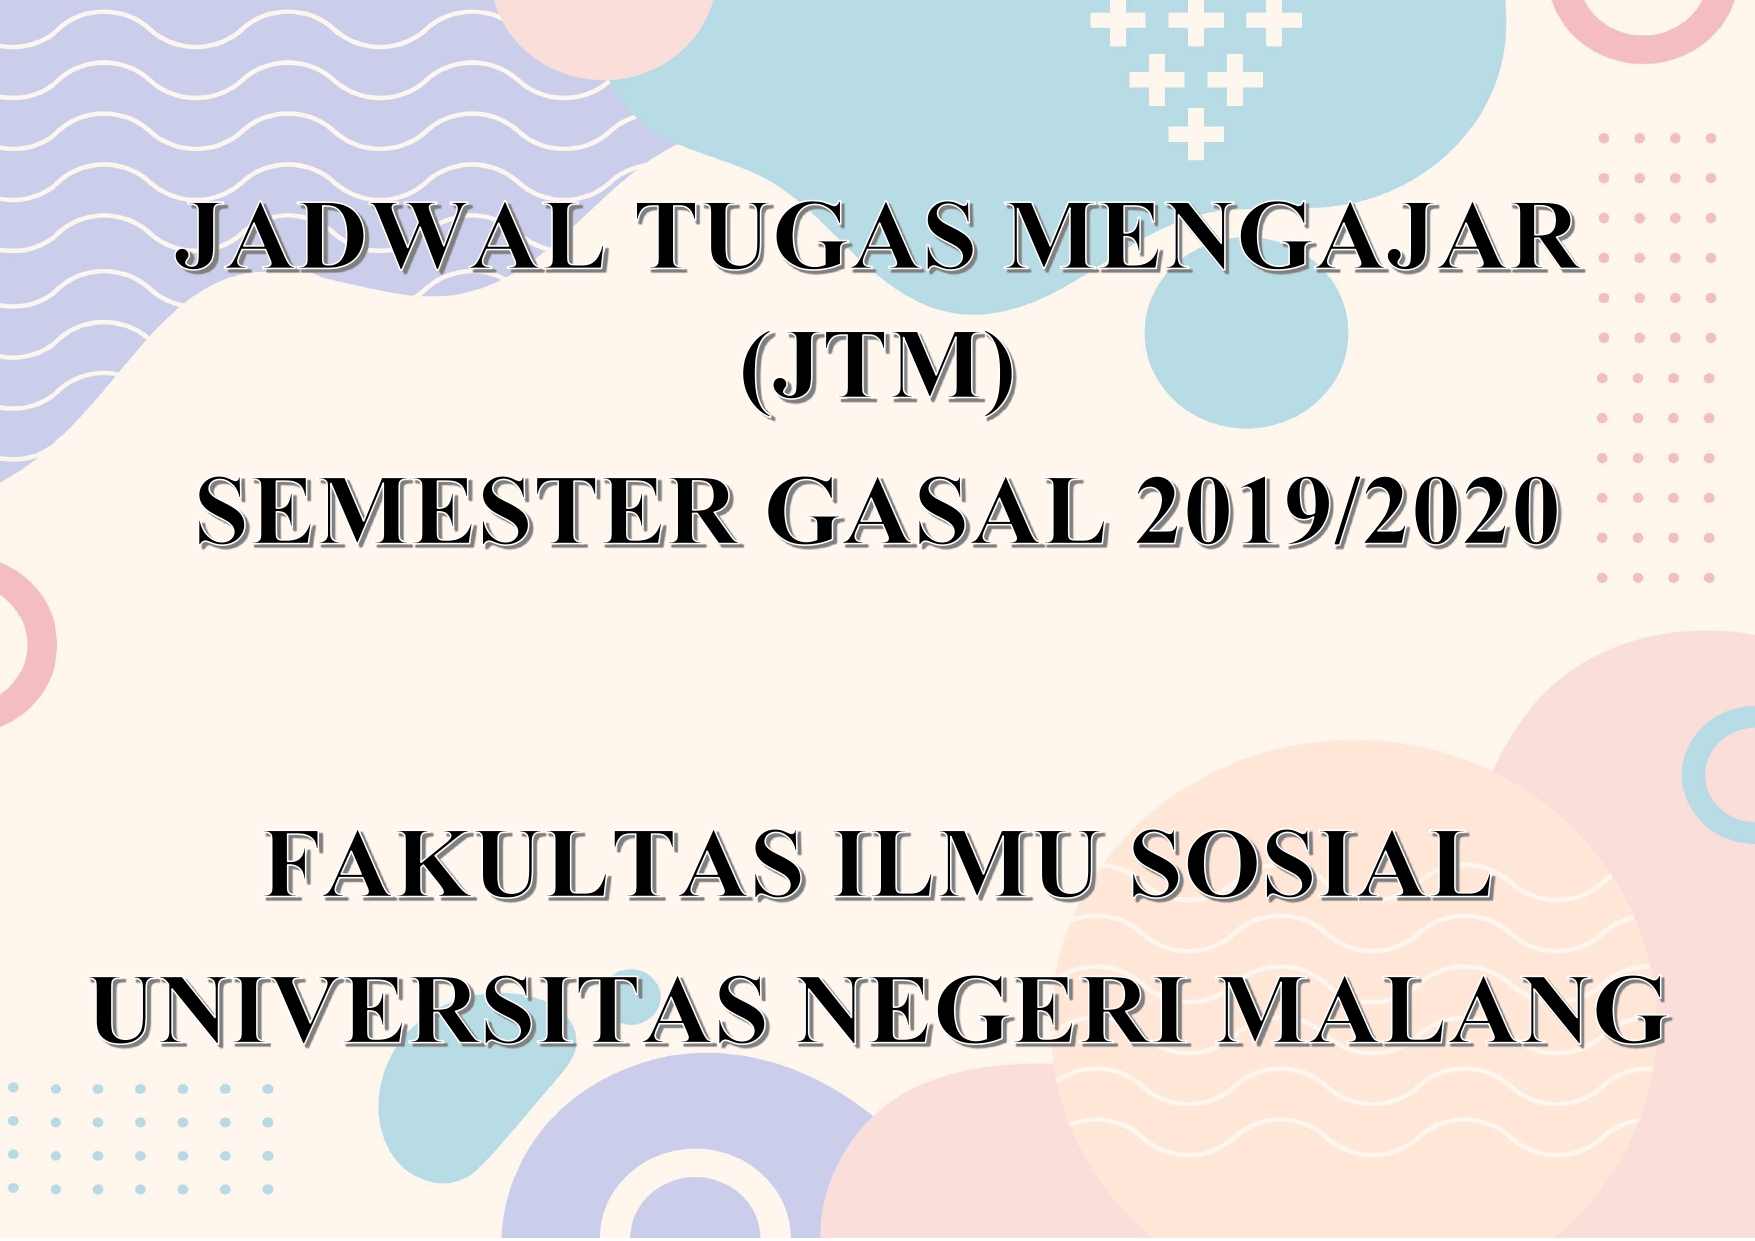 JADWAL TUGAS MENGAJAR (JTM) SEMESTER GASAL 2019/2020